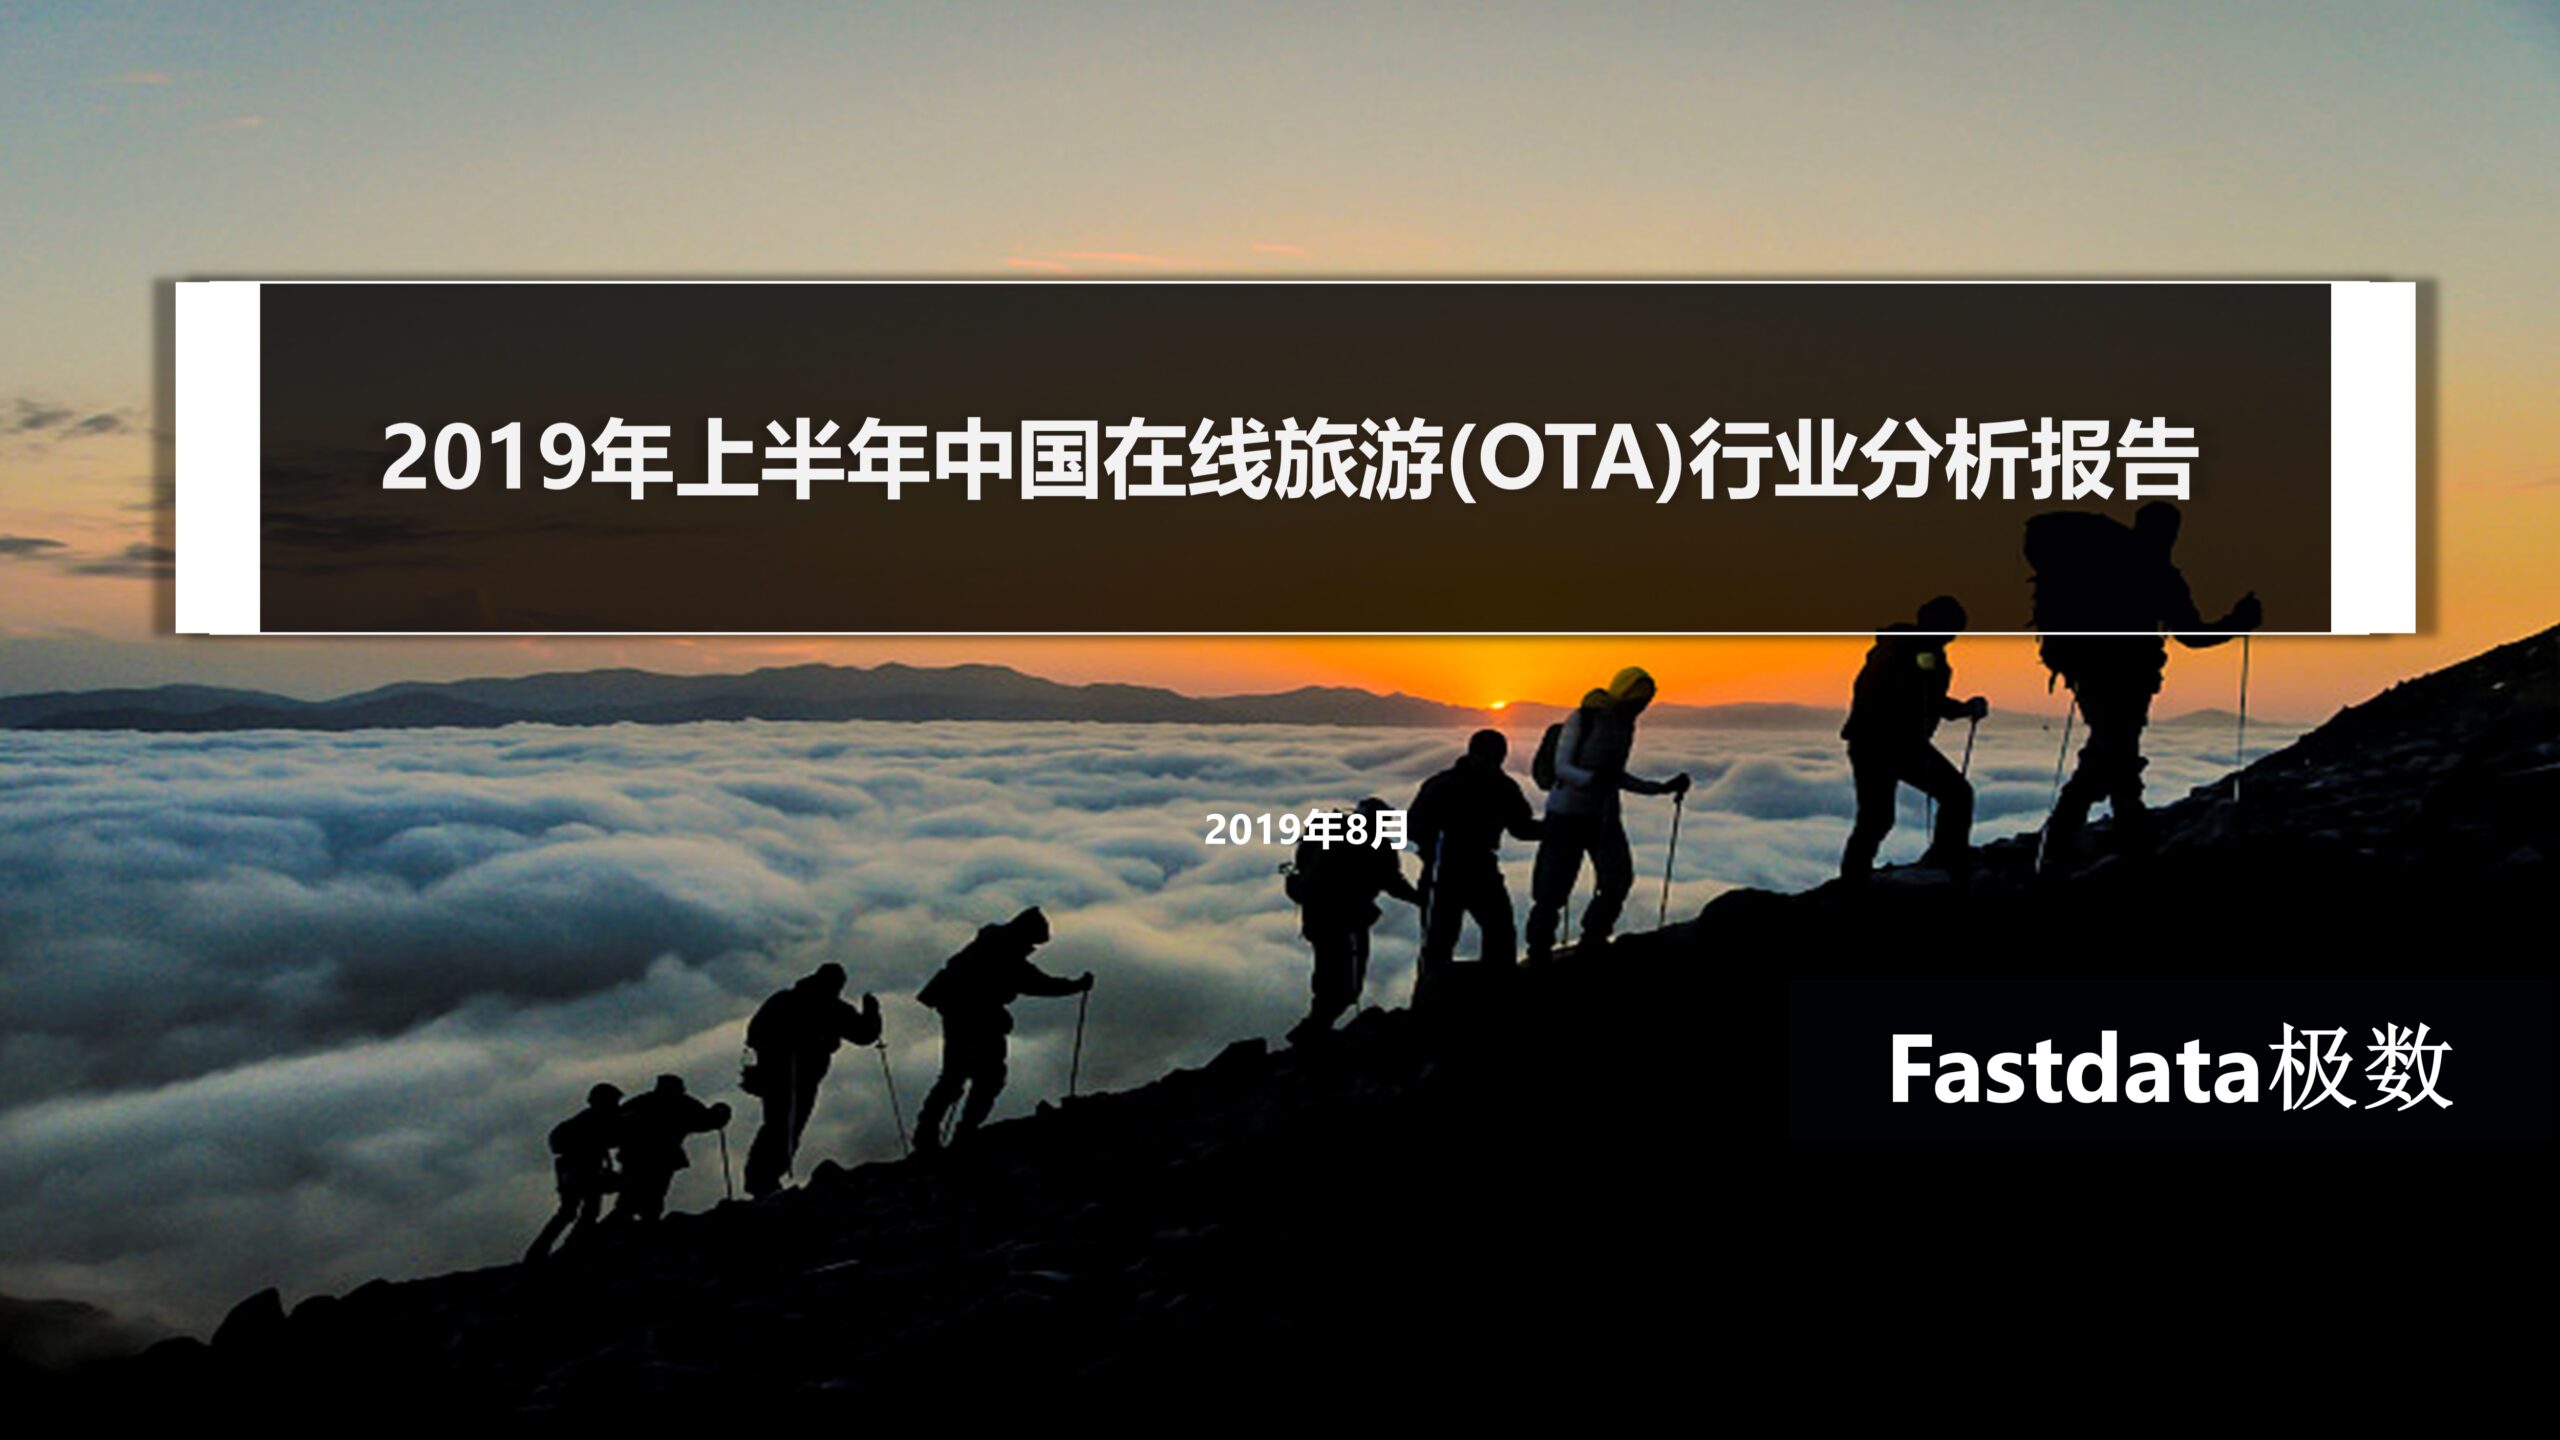 Fastdata极数：2019年上半年中国在线旅游(OTA)行业分析报告